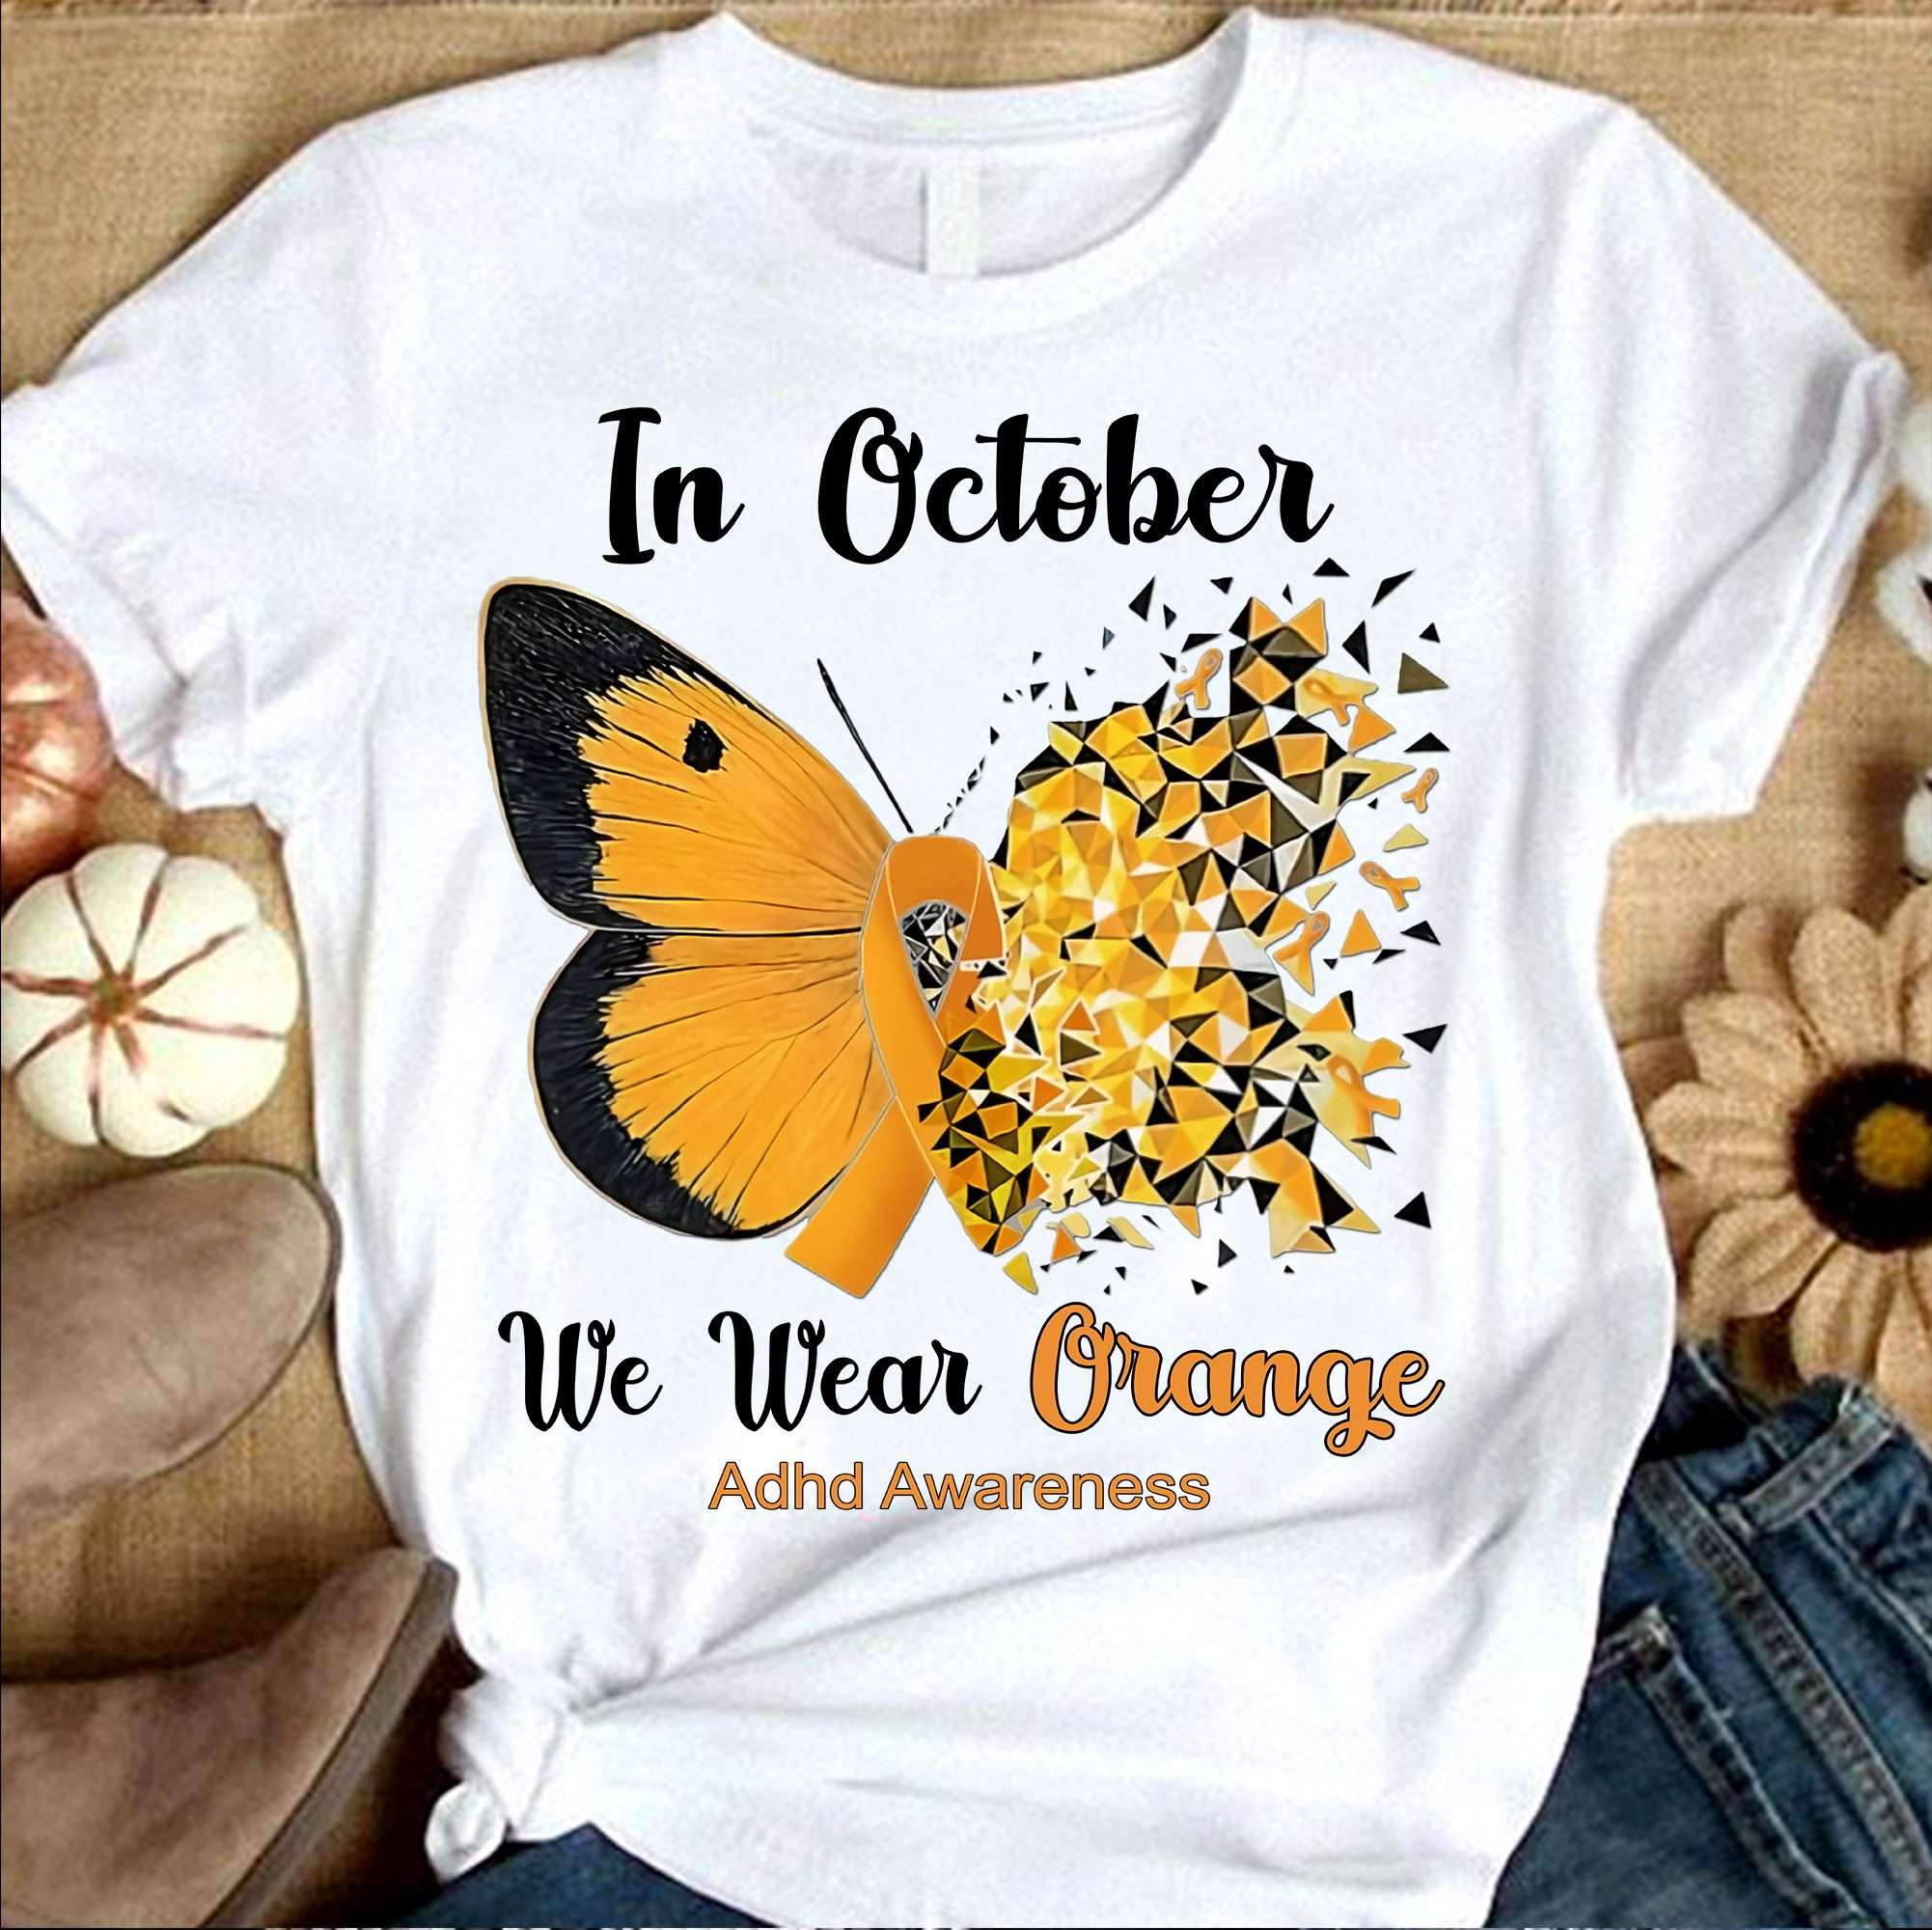 In october we wear orange - Adhd awareness, orange butterfly ribbon Shirt,  Hoodie, Sweatshirt - FridayStuff